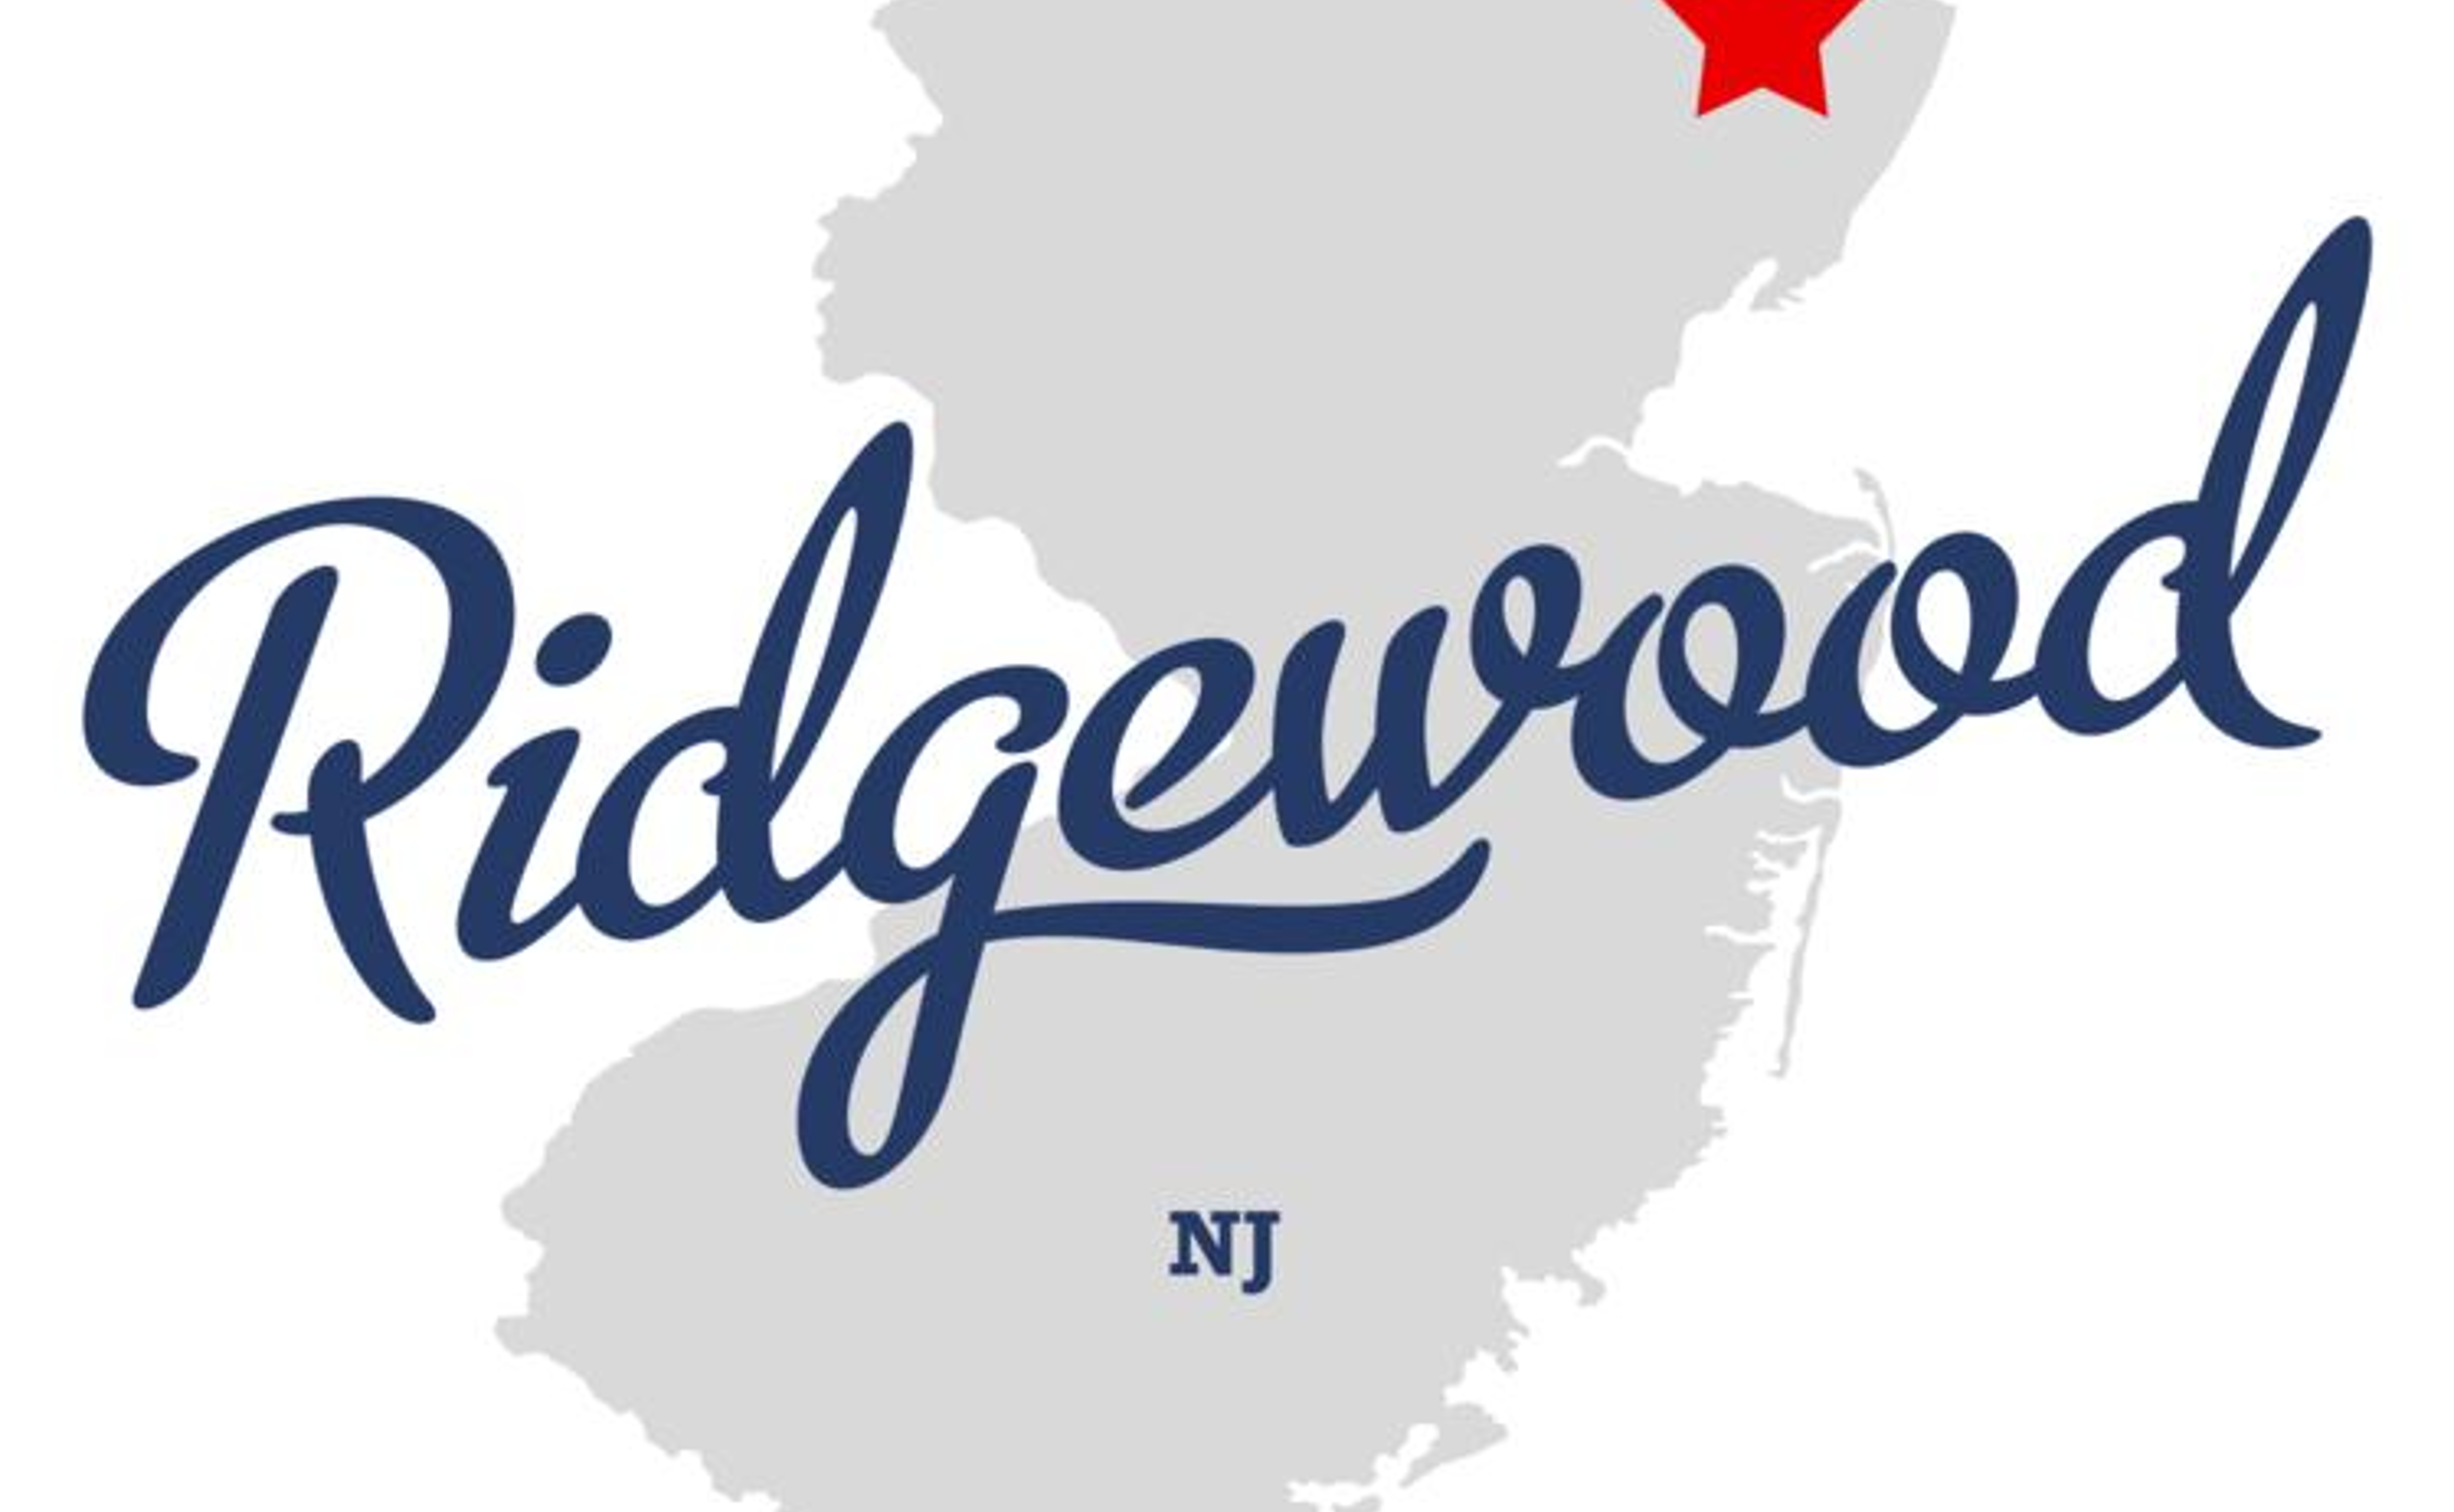 Ridgewood